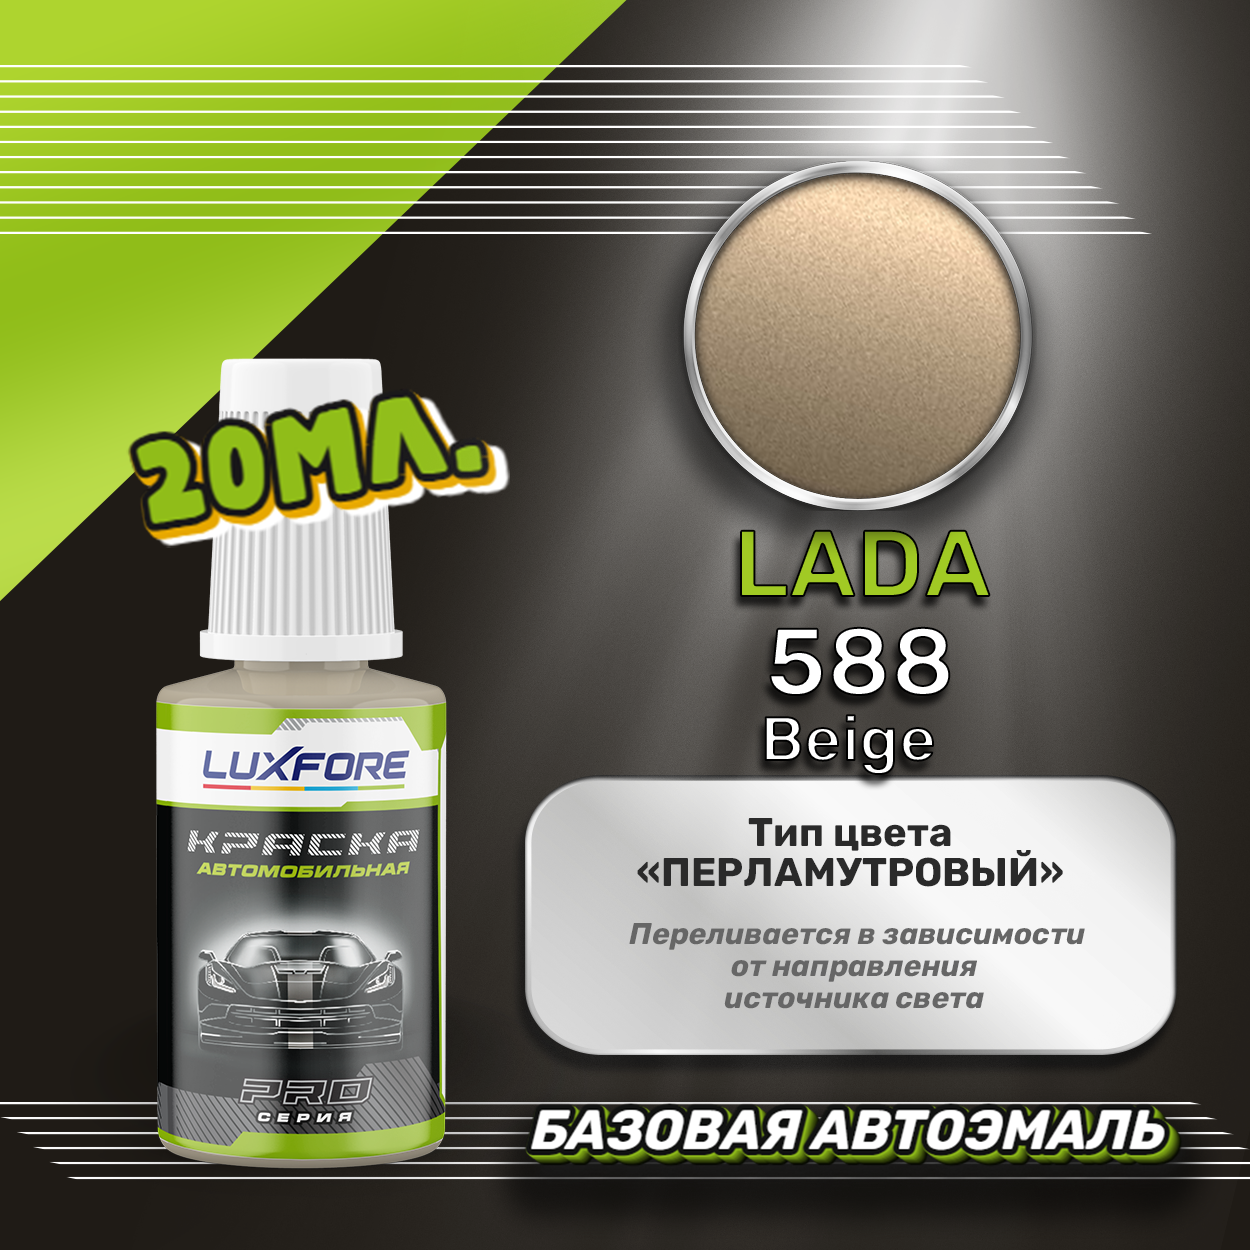 Luxfore автоэмаль базовая LADA 588 Beige подкраска 20 мл.